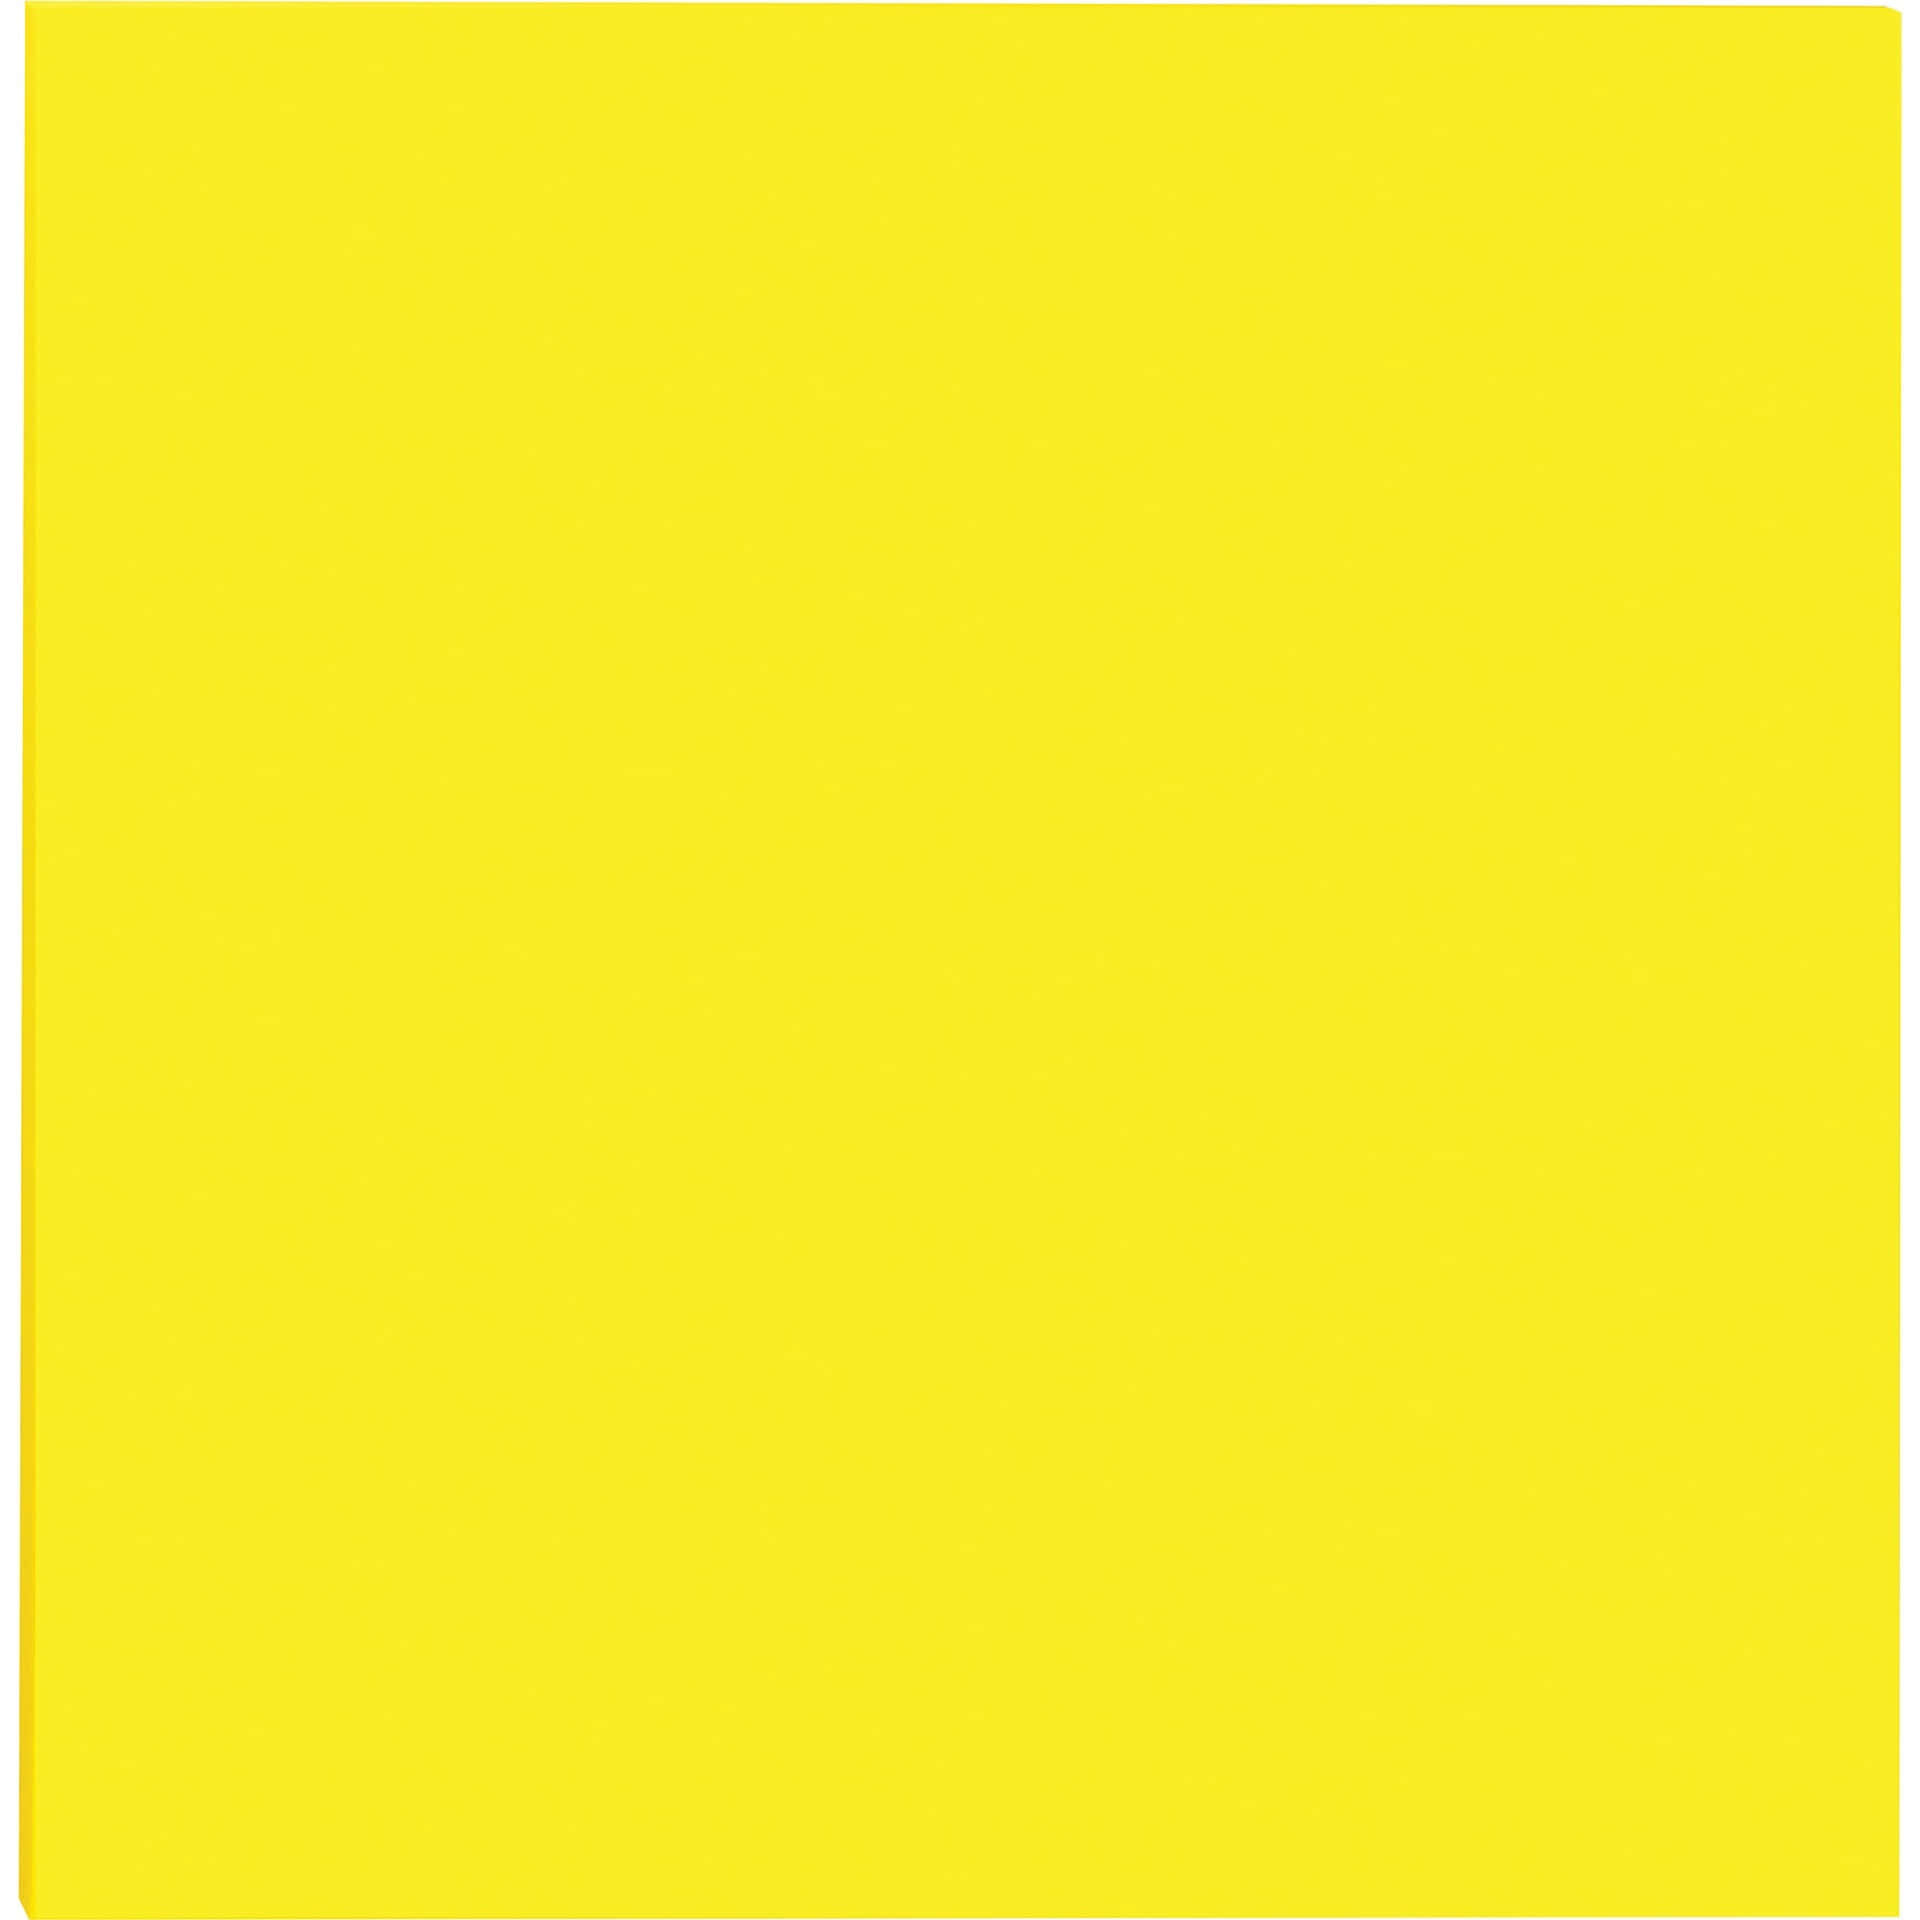 Vibrant Yellow Square Wallpaper